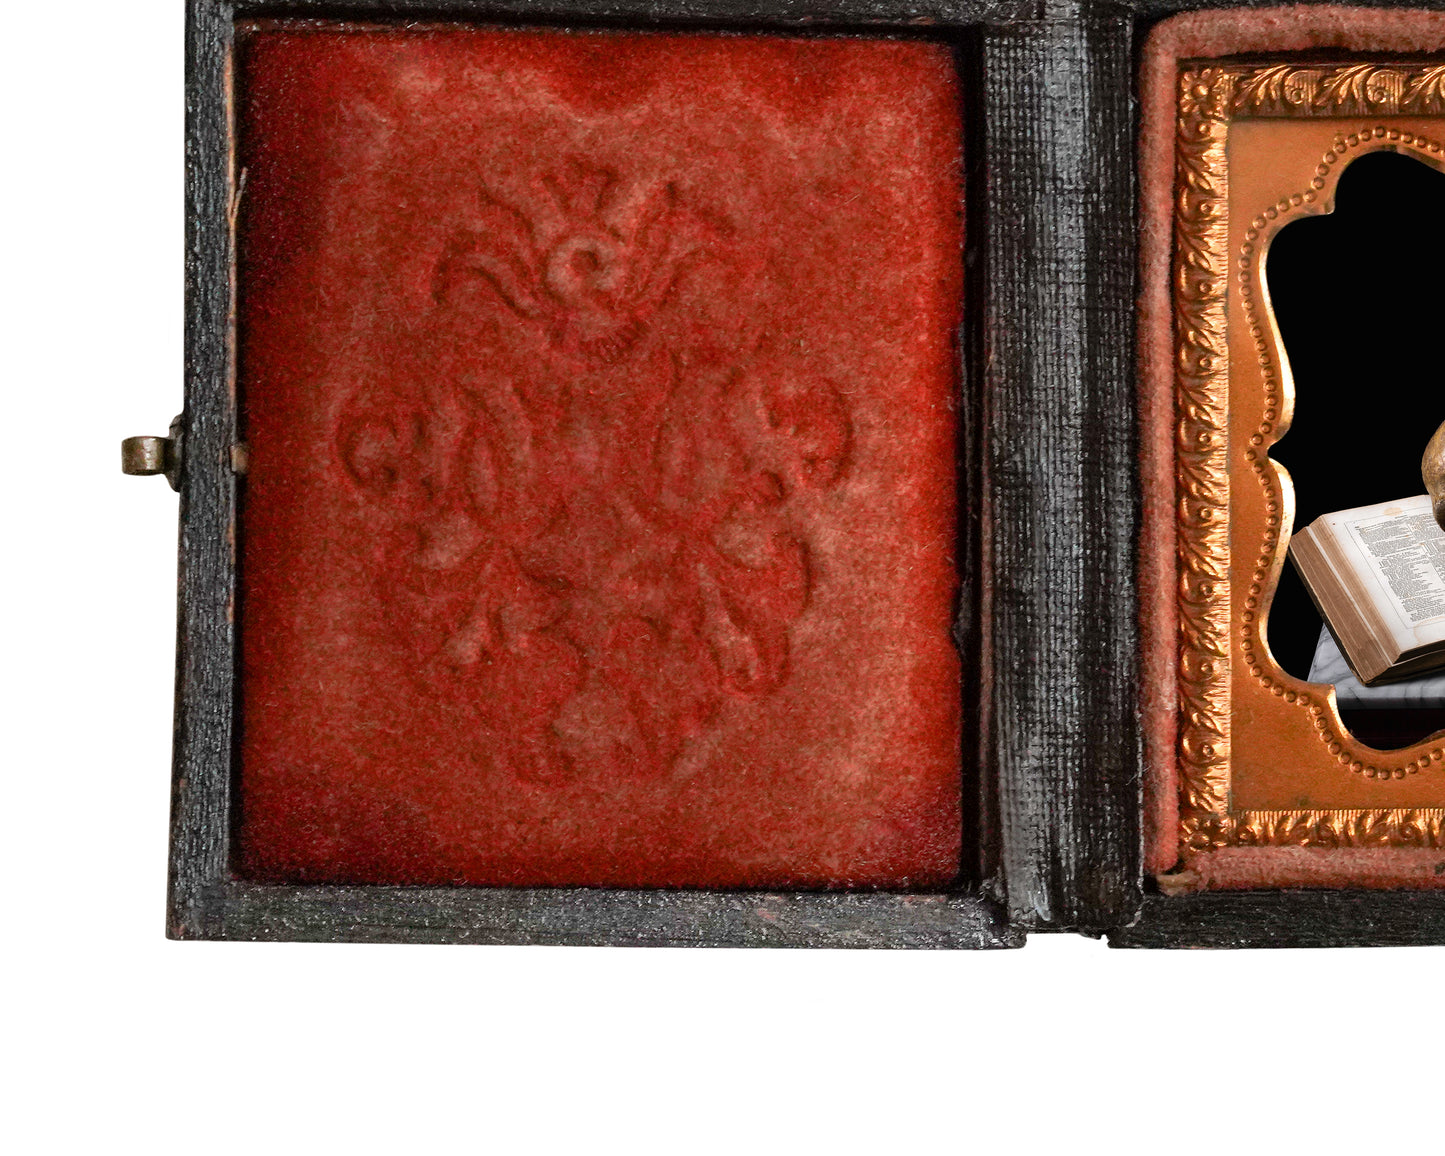 'Brevis' in Antique Union Case - Miniature